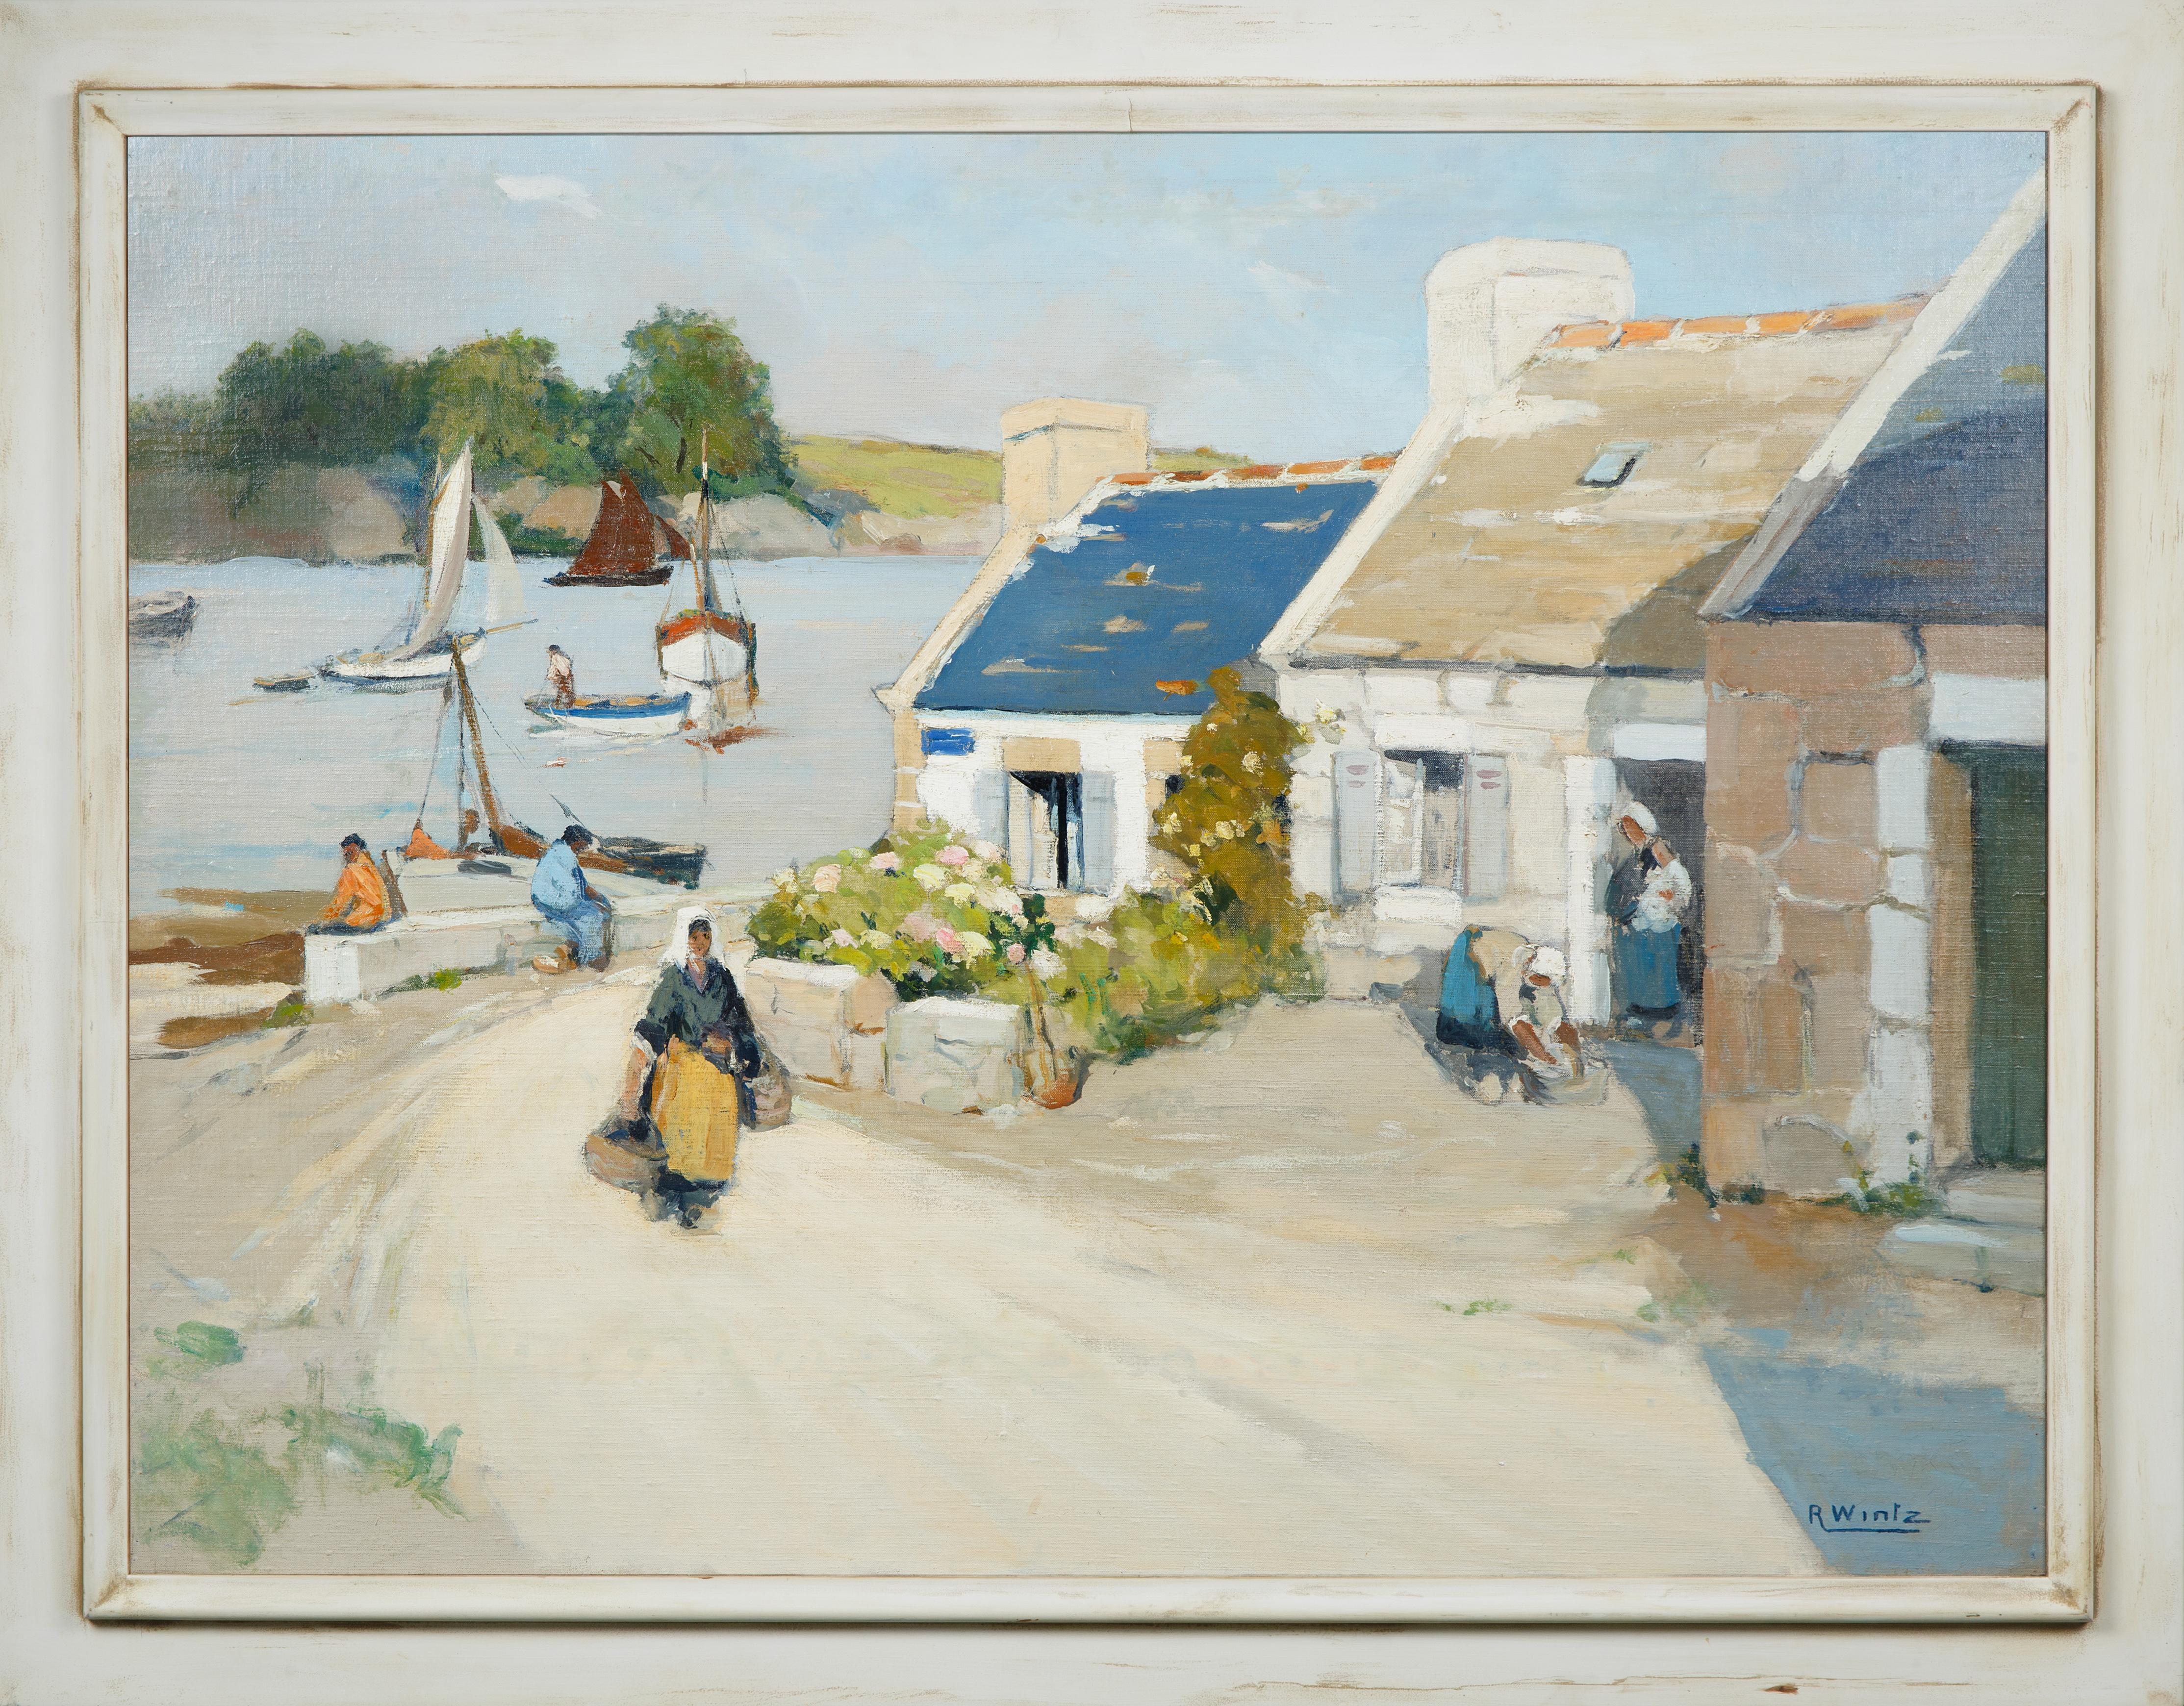 Ploumanach, Côte du Nord - Painting by Raymond Wintz